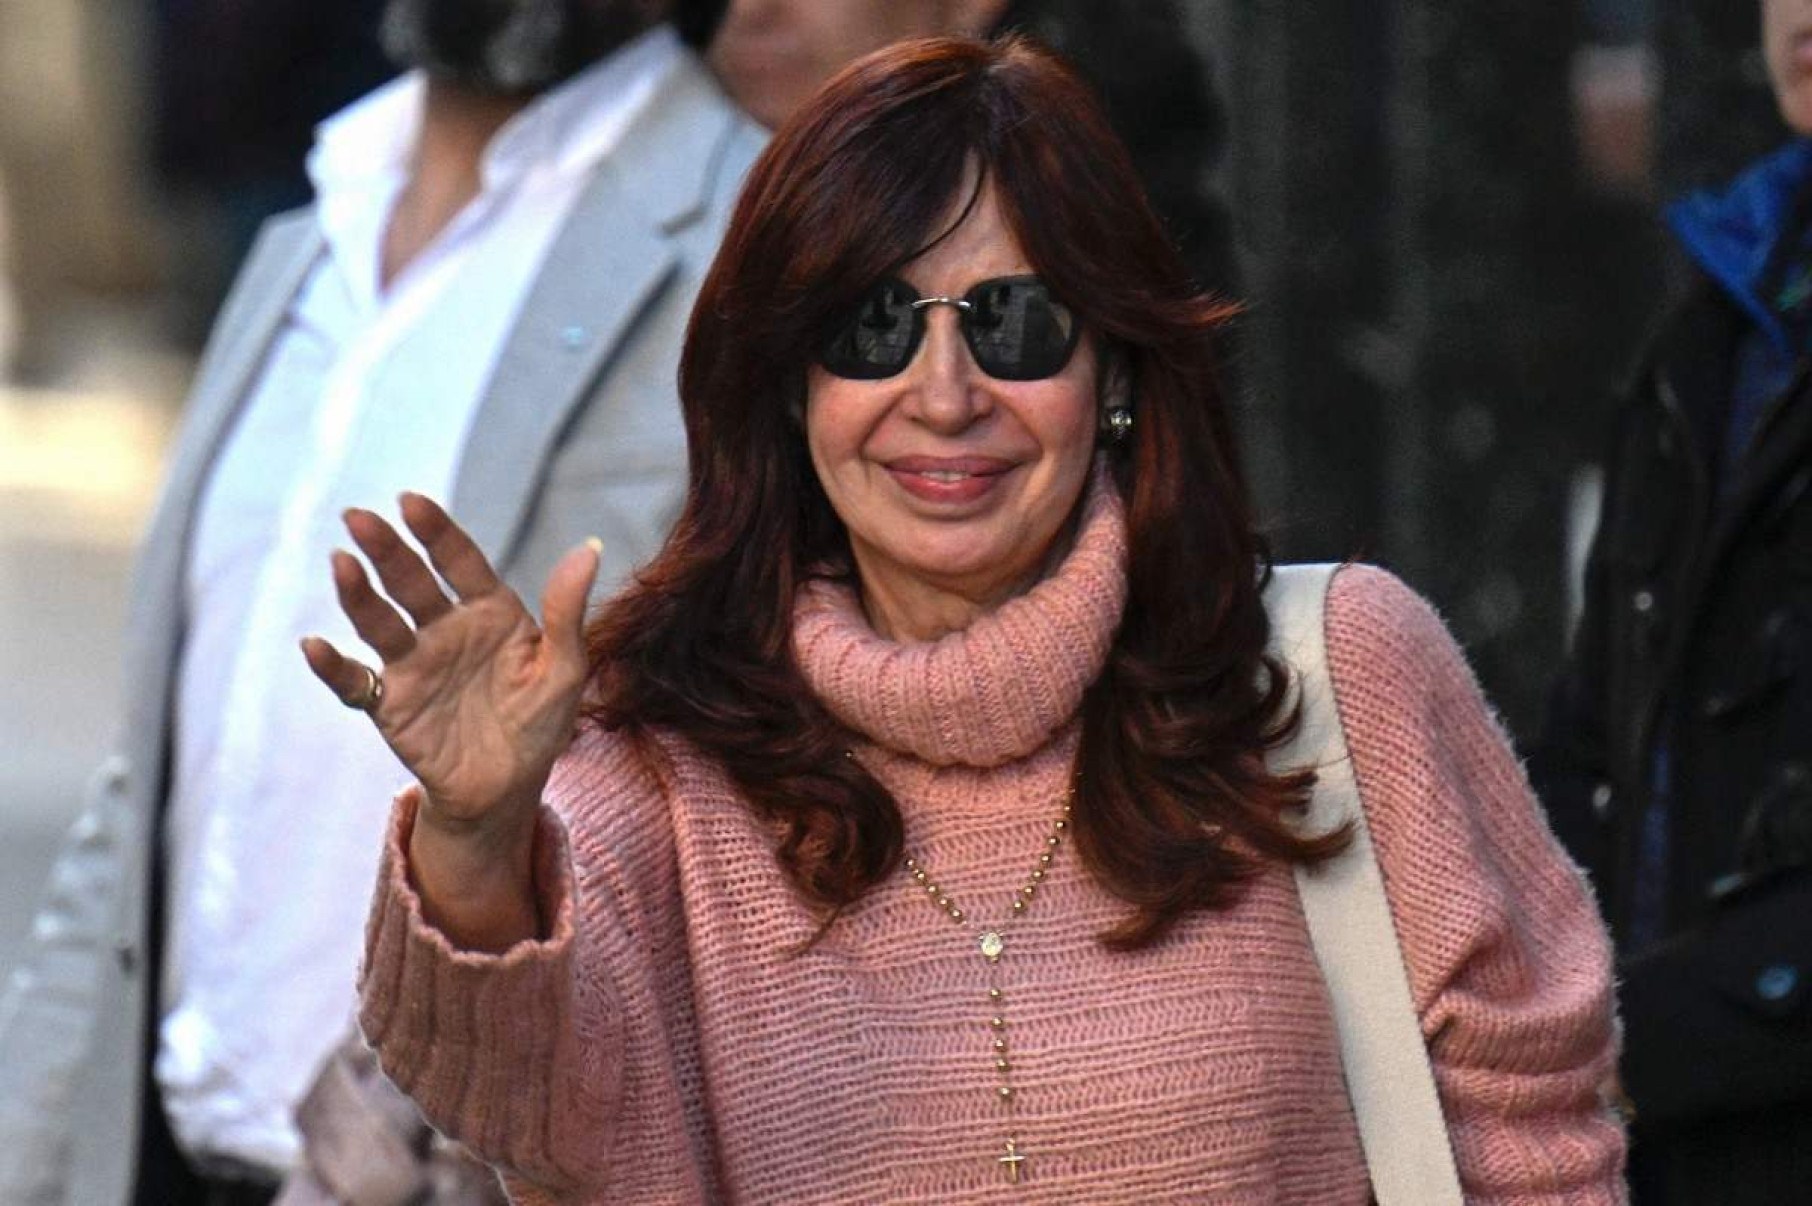 Começa o julgamento do brasileiro que tentou matar Cristina Kirchner